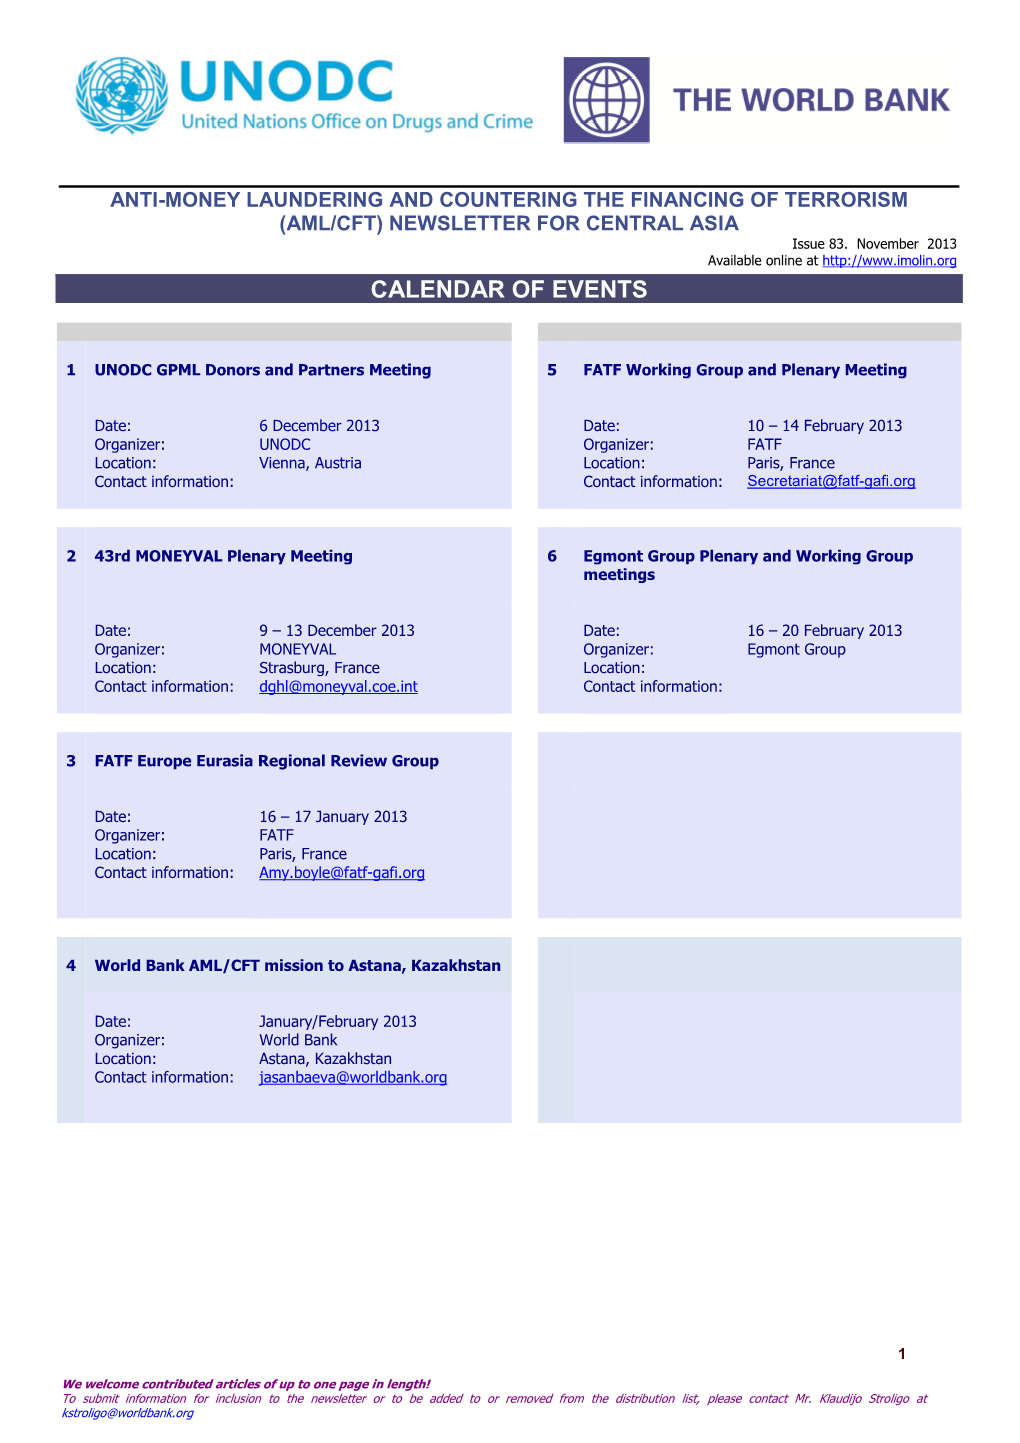 The World Bank UNODC AML CFT Newsletter, November 2013